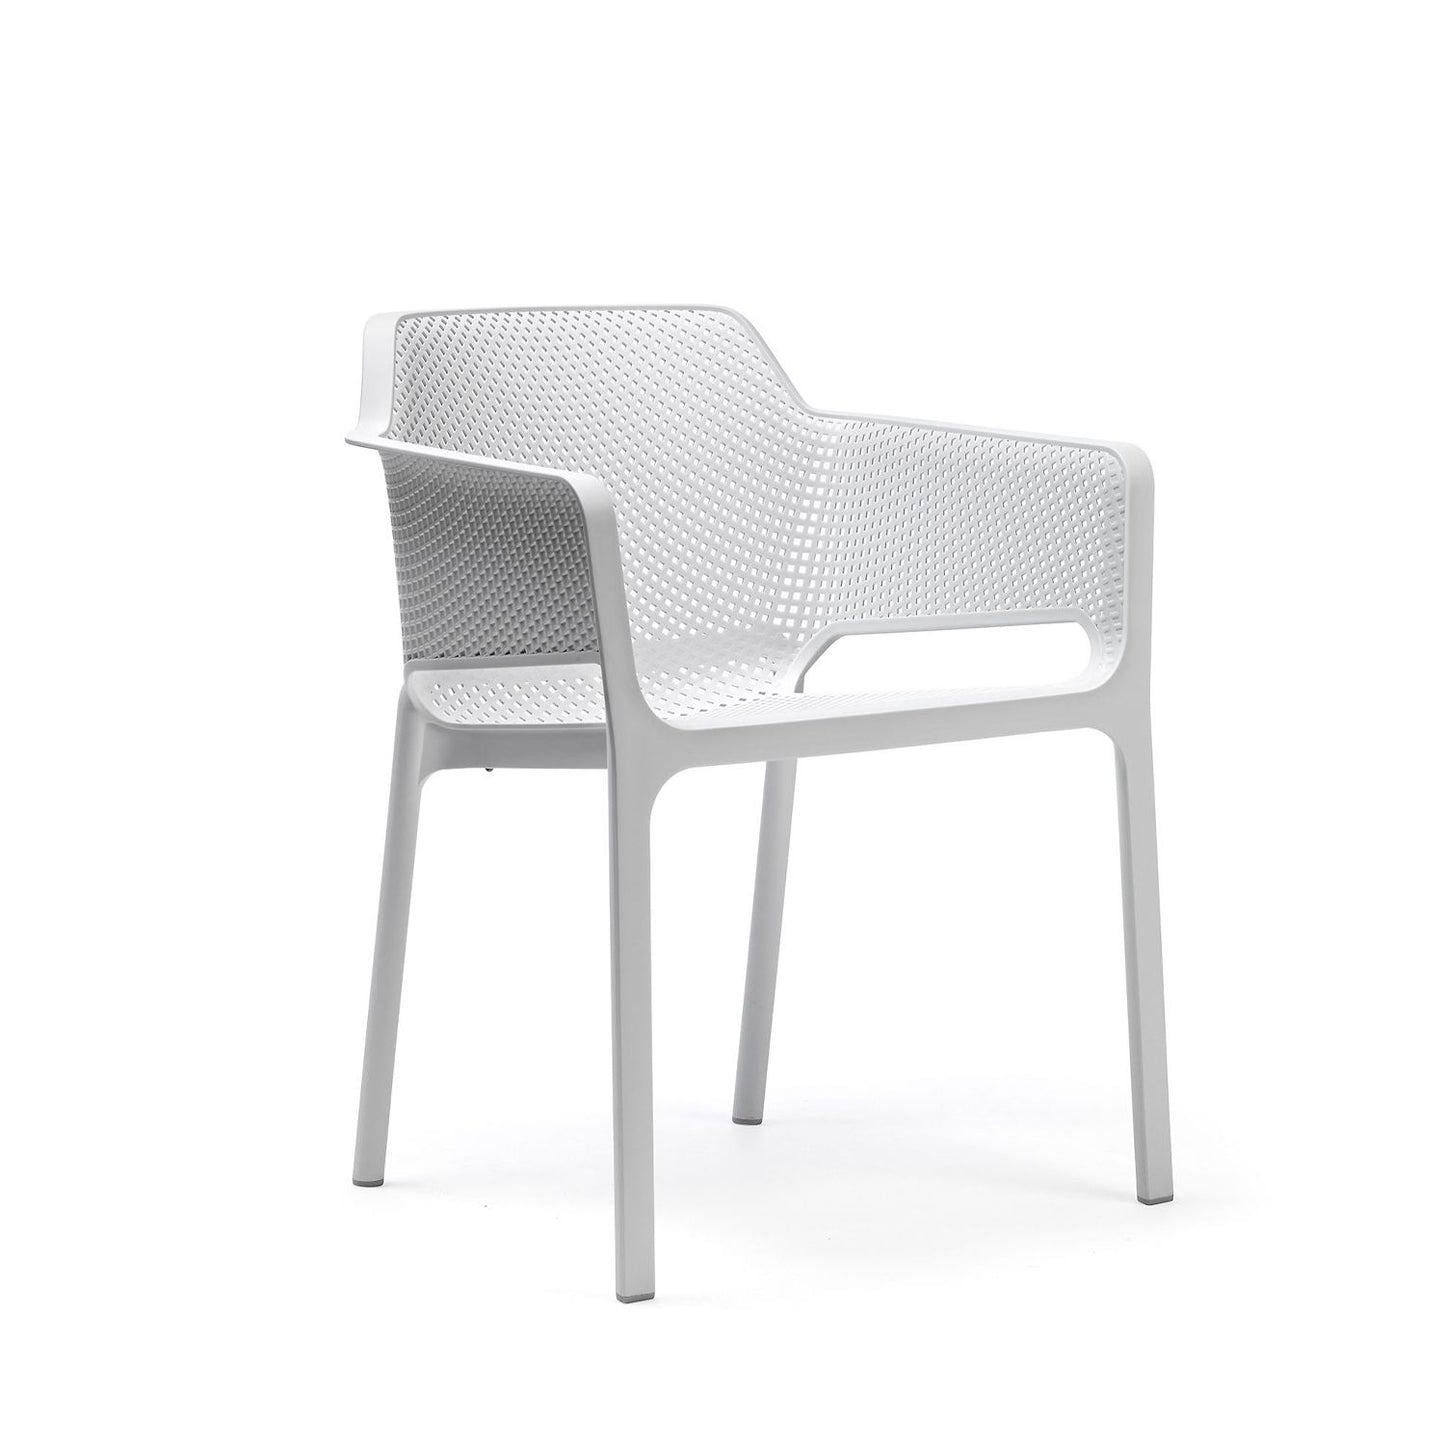 Net Garden Chair By Nardi - Set Of 6 - White